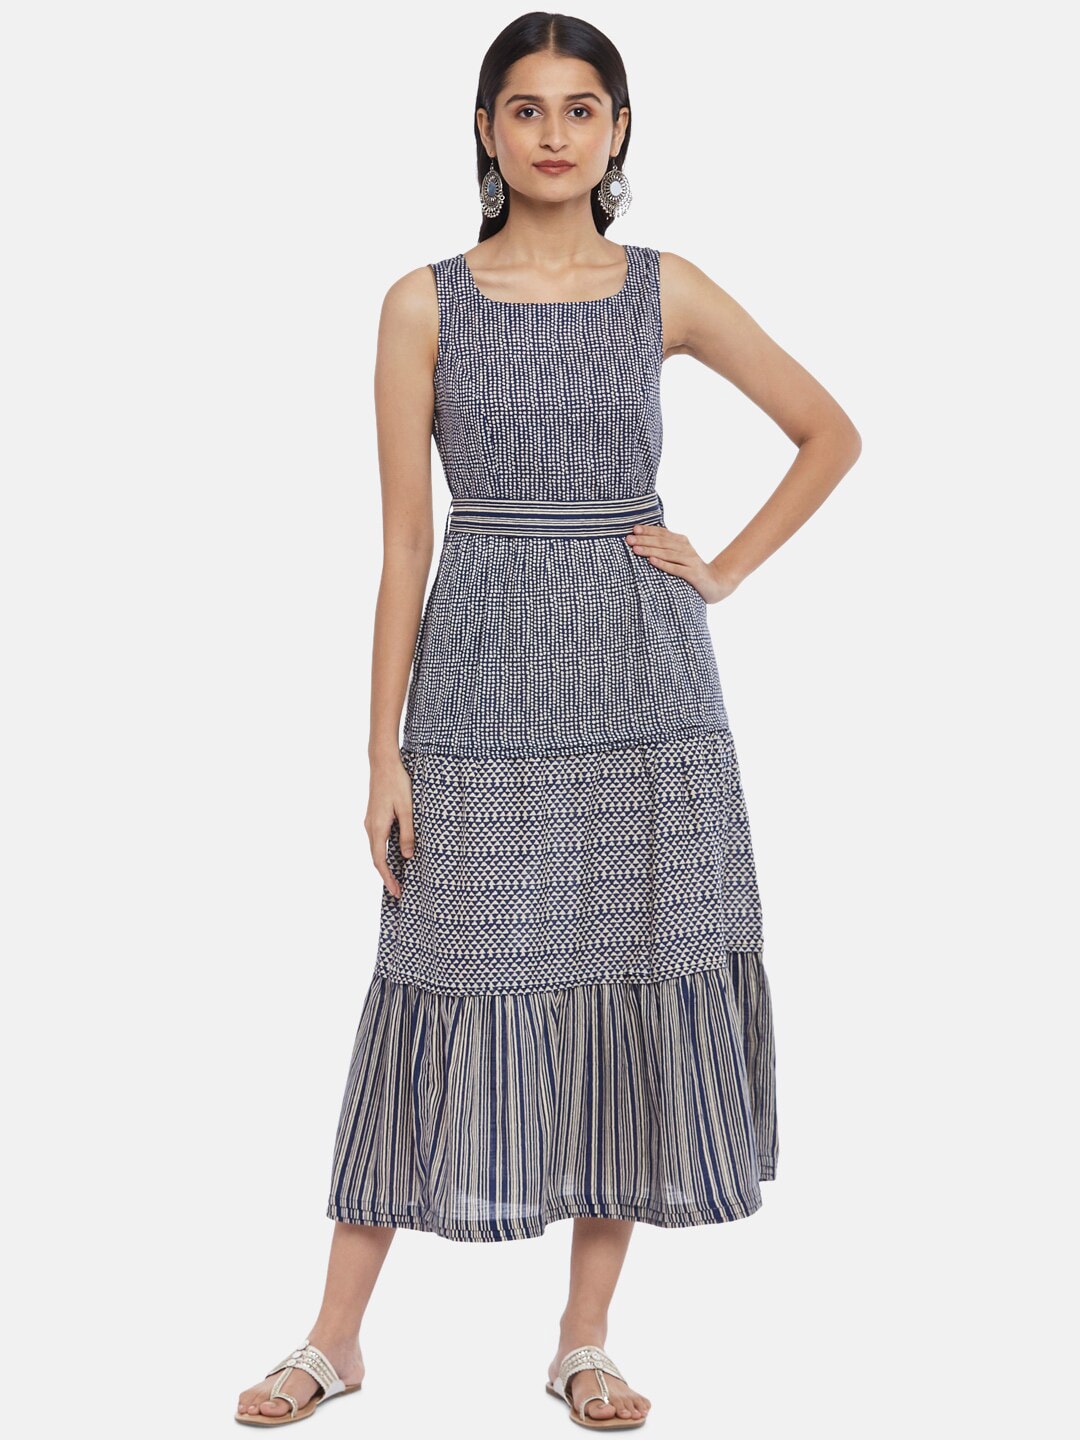 AKKRITI BY PANTALOONS Women Blue & White Printed Sleeveless Midi Dress Price in India